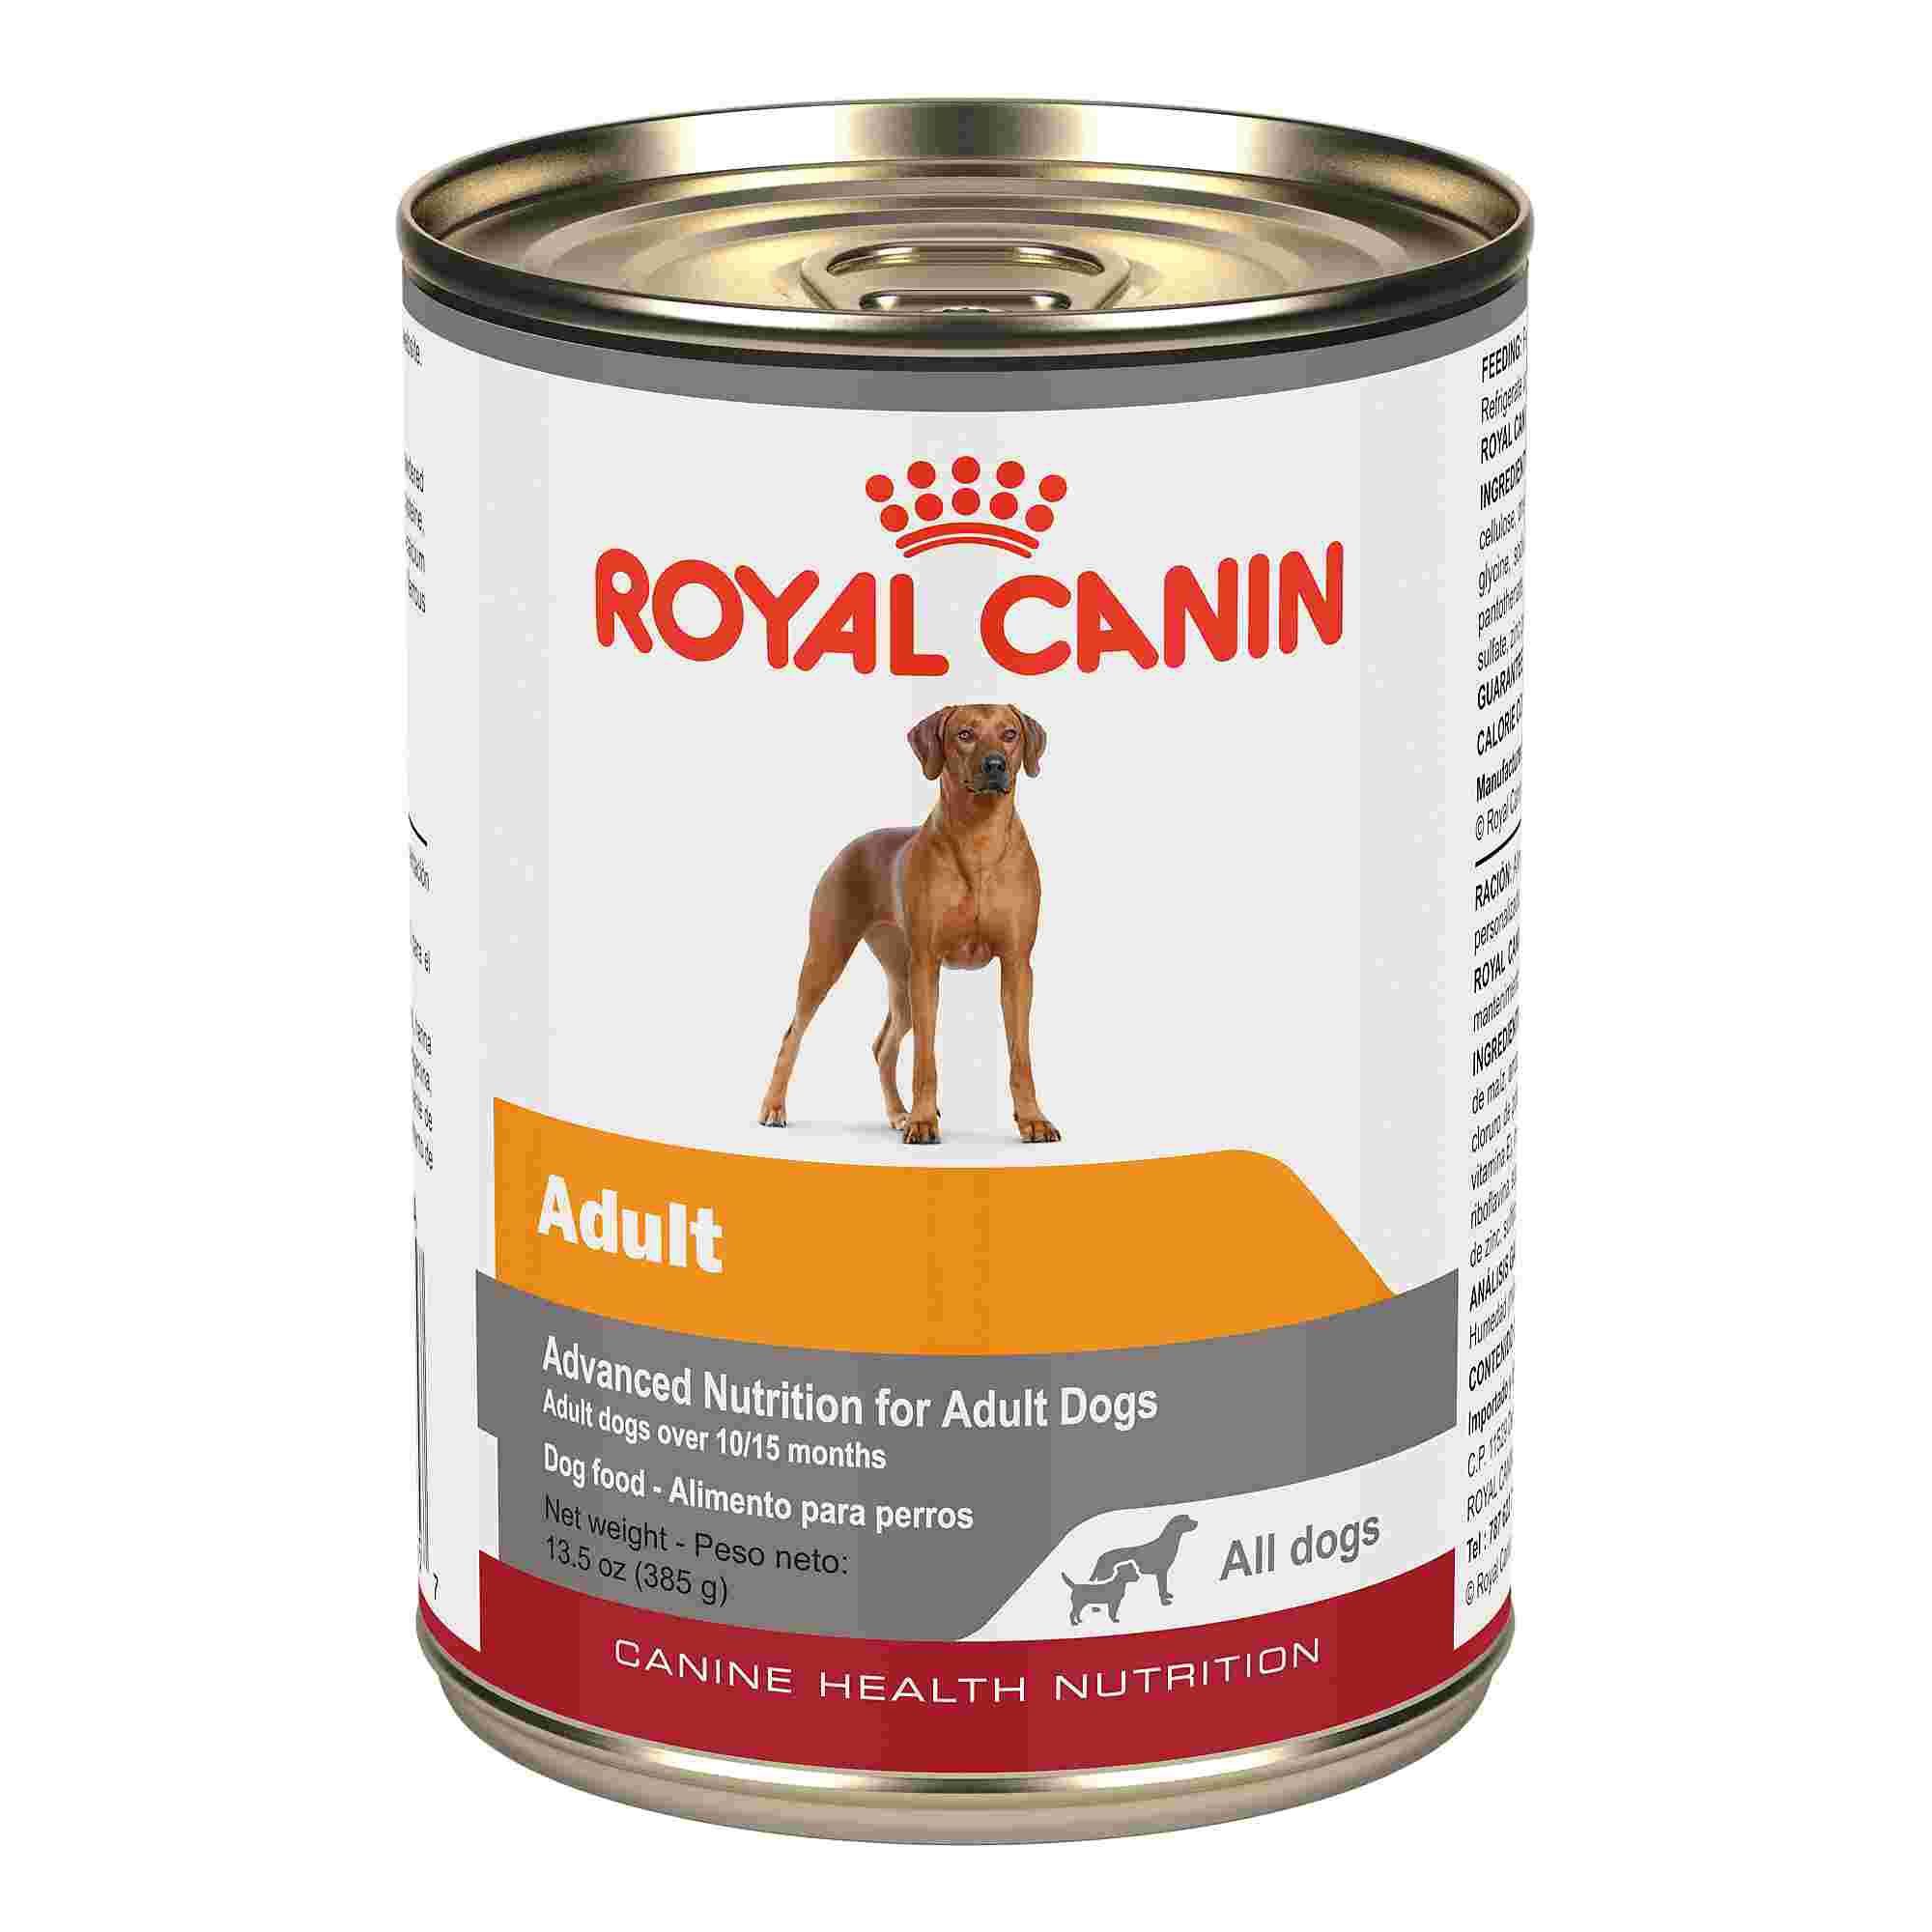 Royal Canin Canine Health Nutrition, Advanced Nutrition Adult Dog Food ...